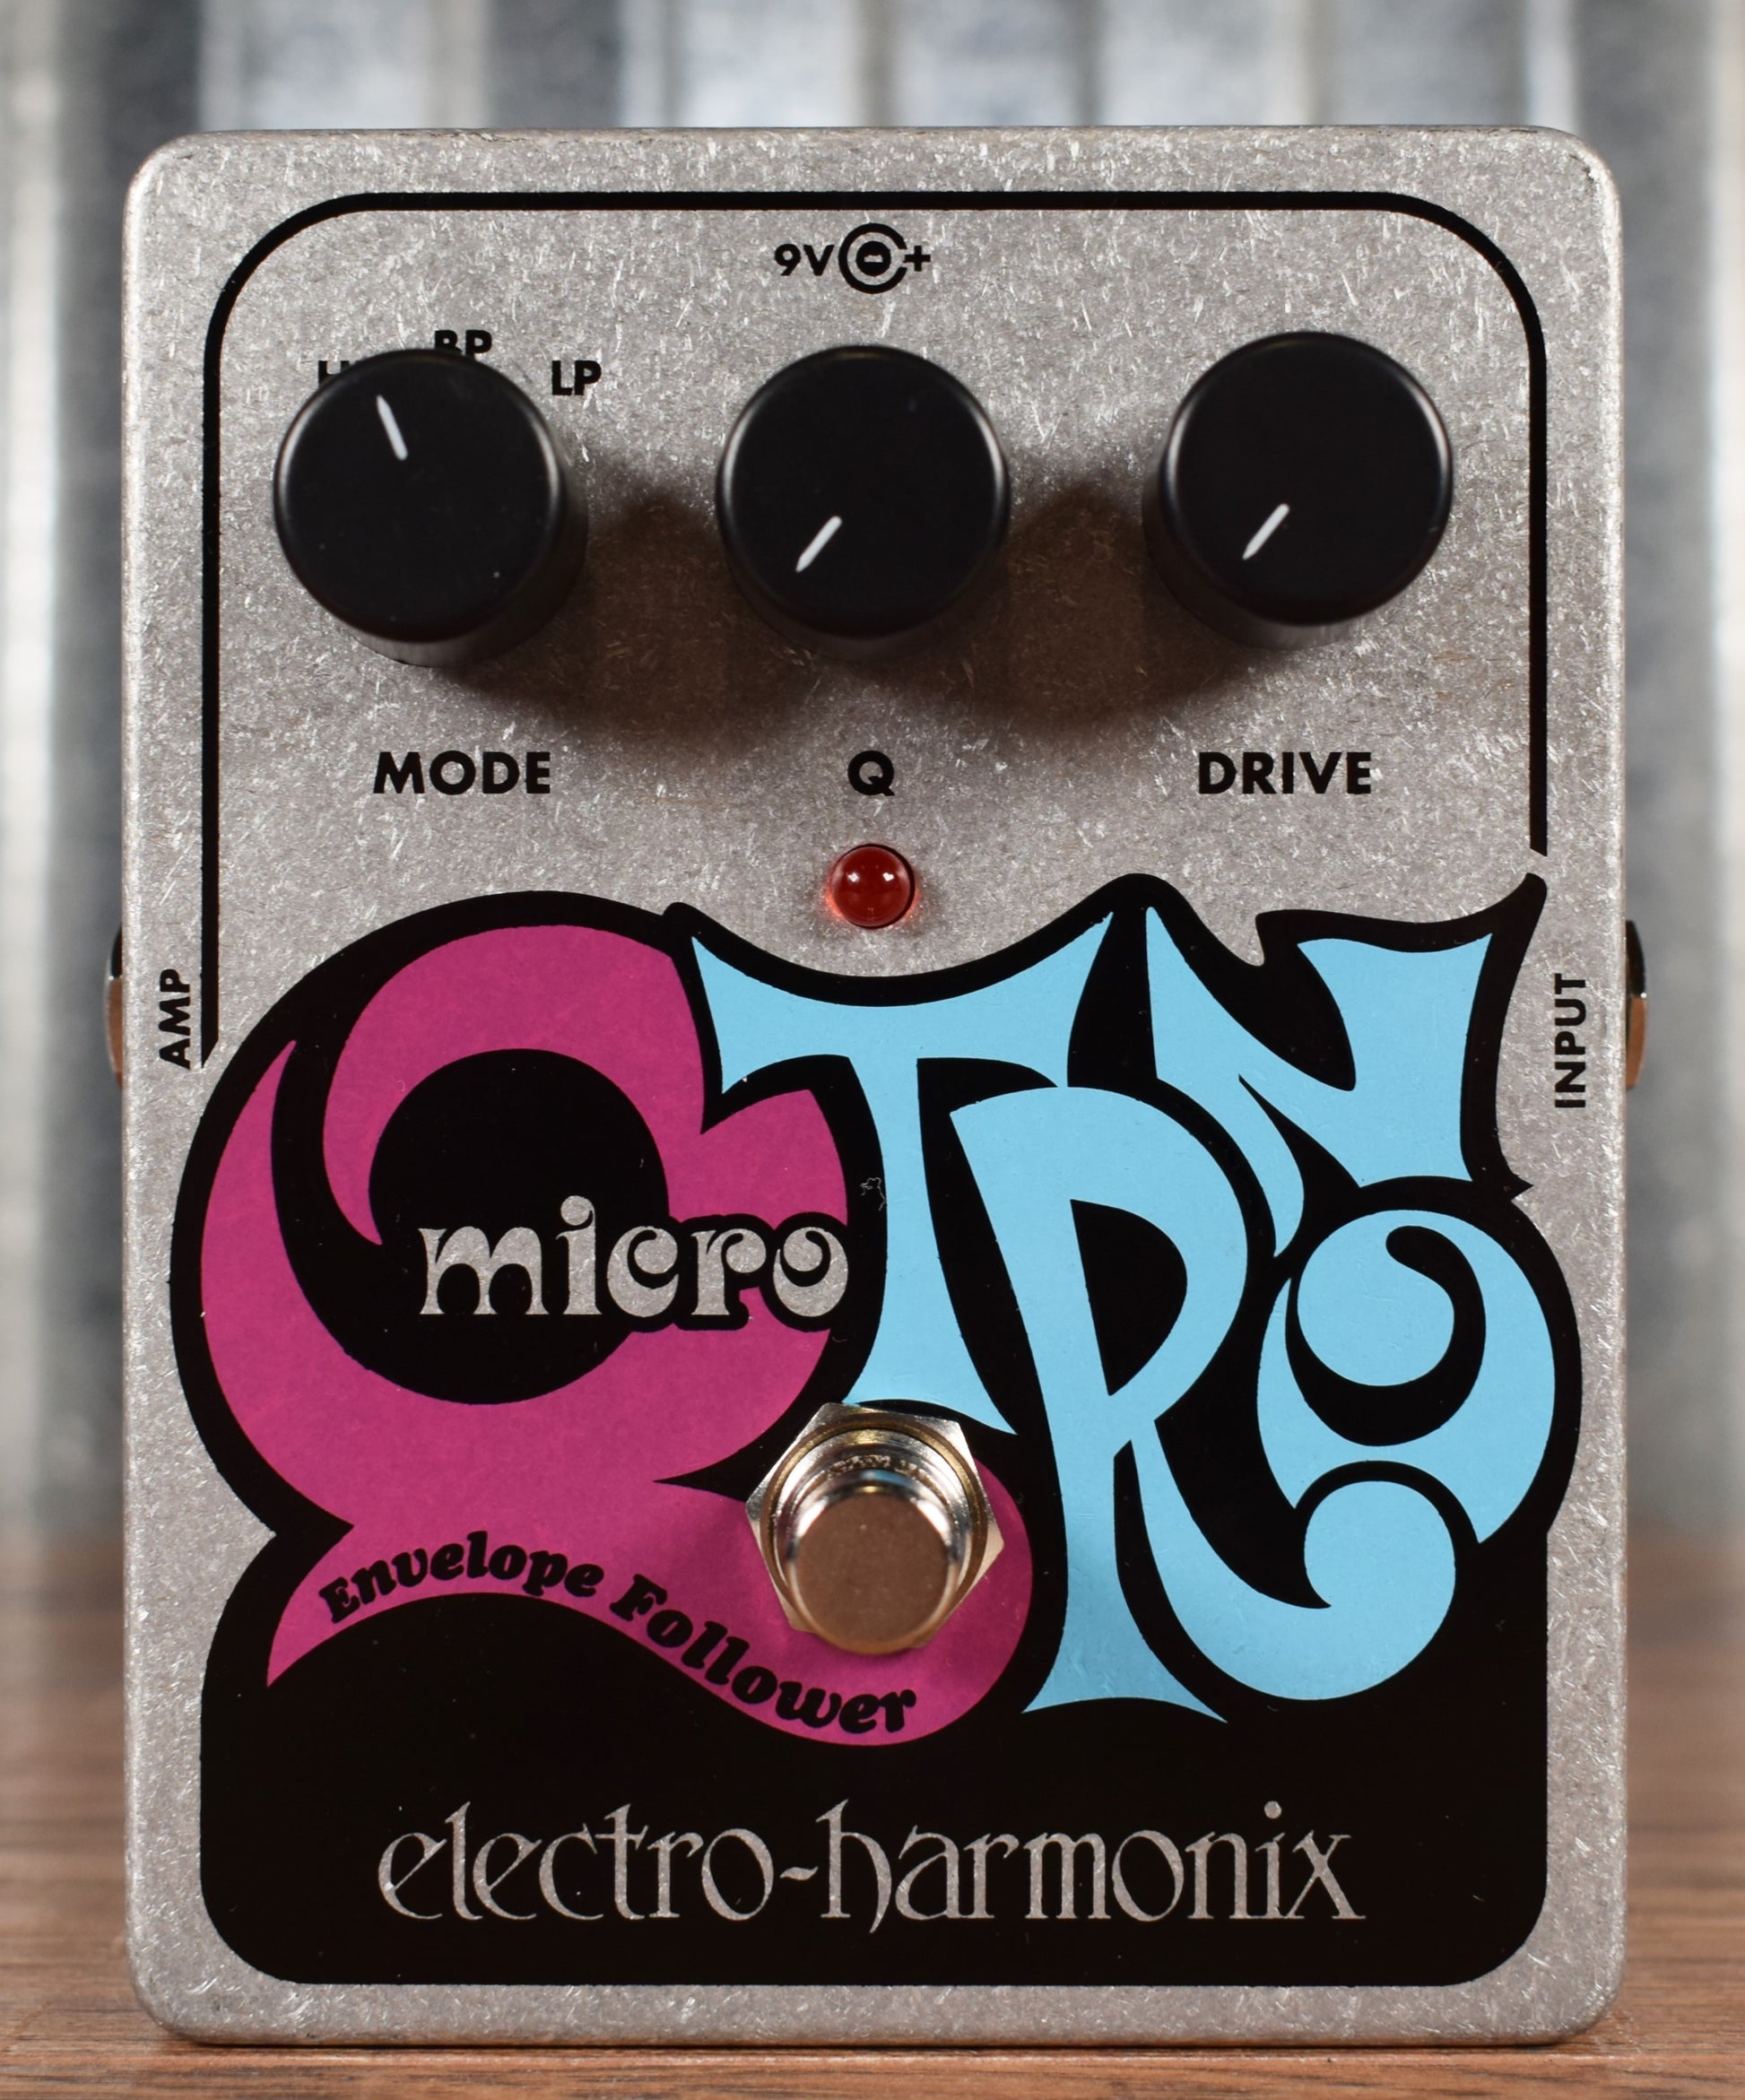 electro harmonix micro q-tron - The pedal effect